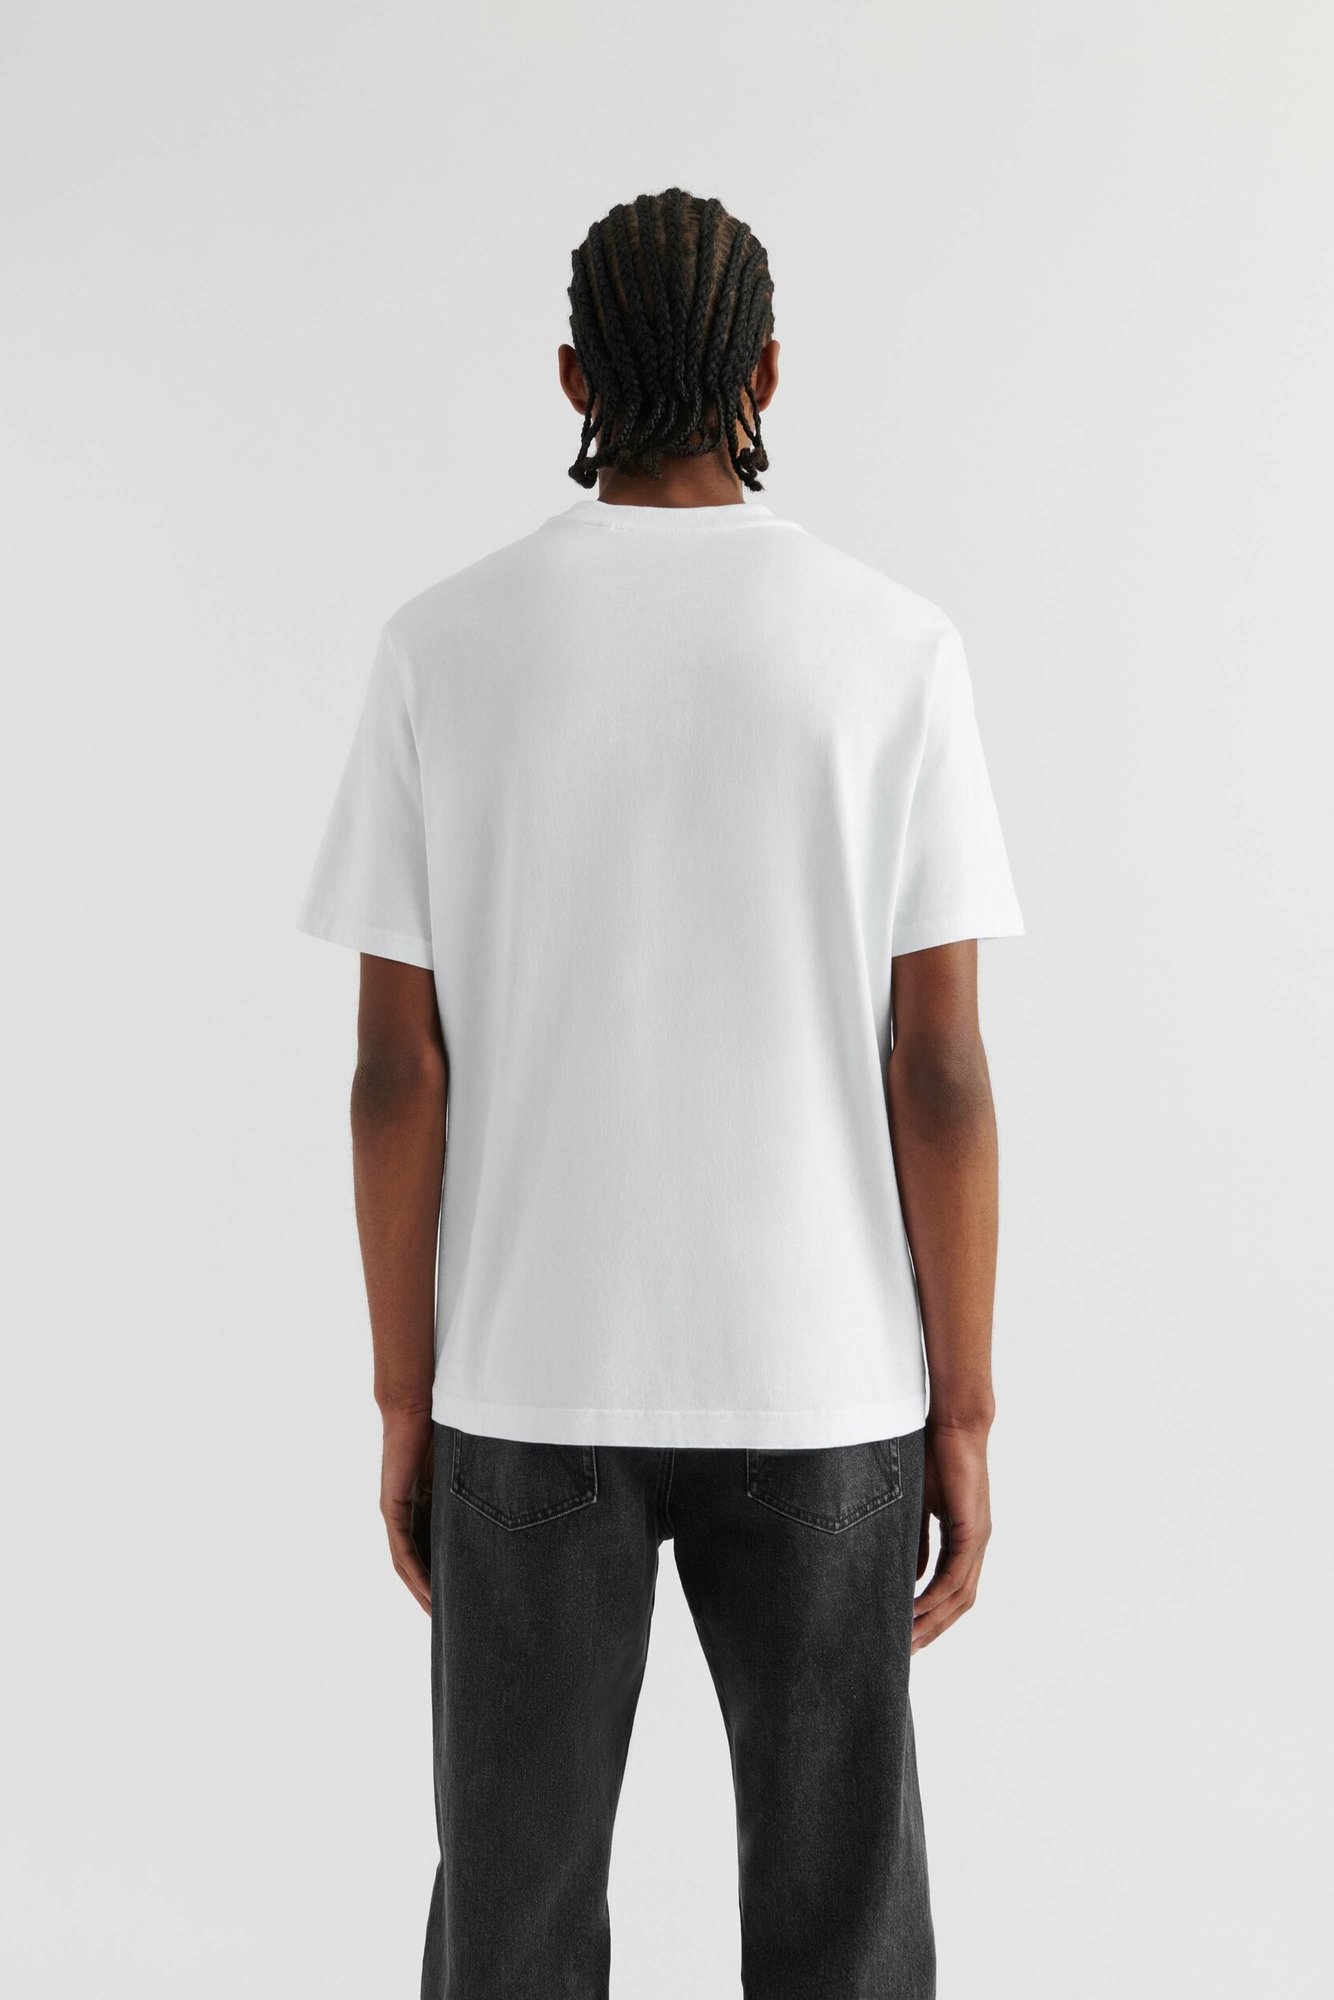 AXEL ARIGATO Signature T-Shirt in White XL